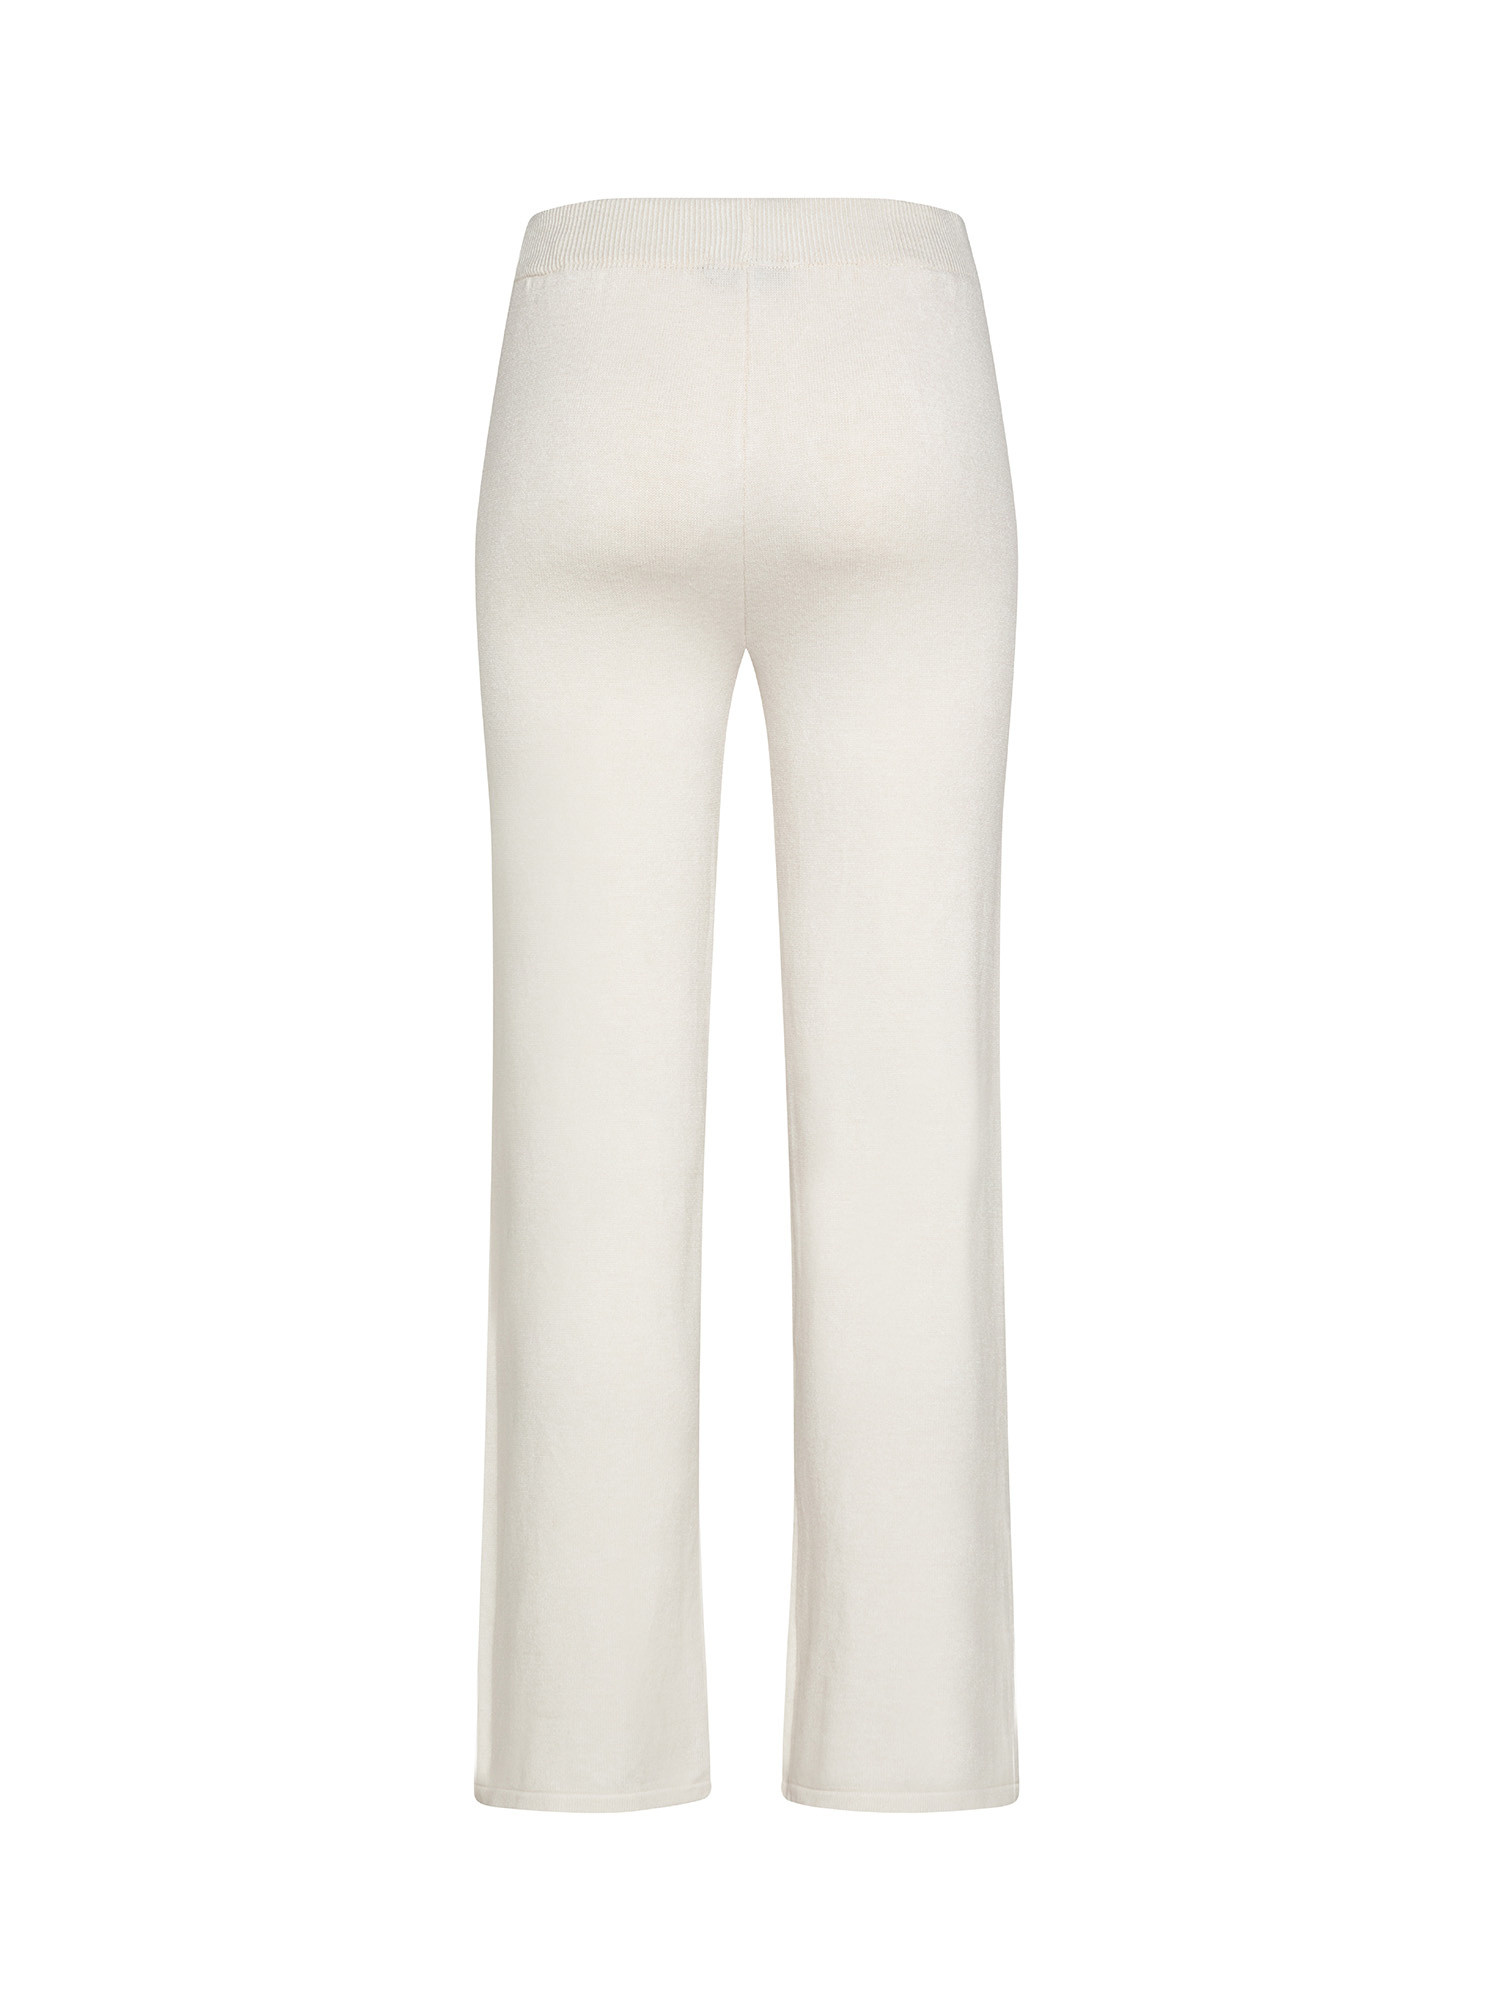 K Collection - Pantalone, Bianco panna, large